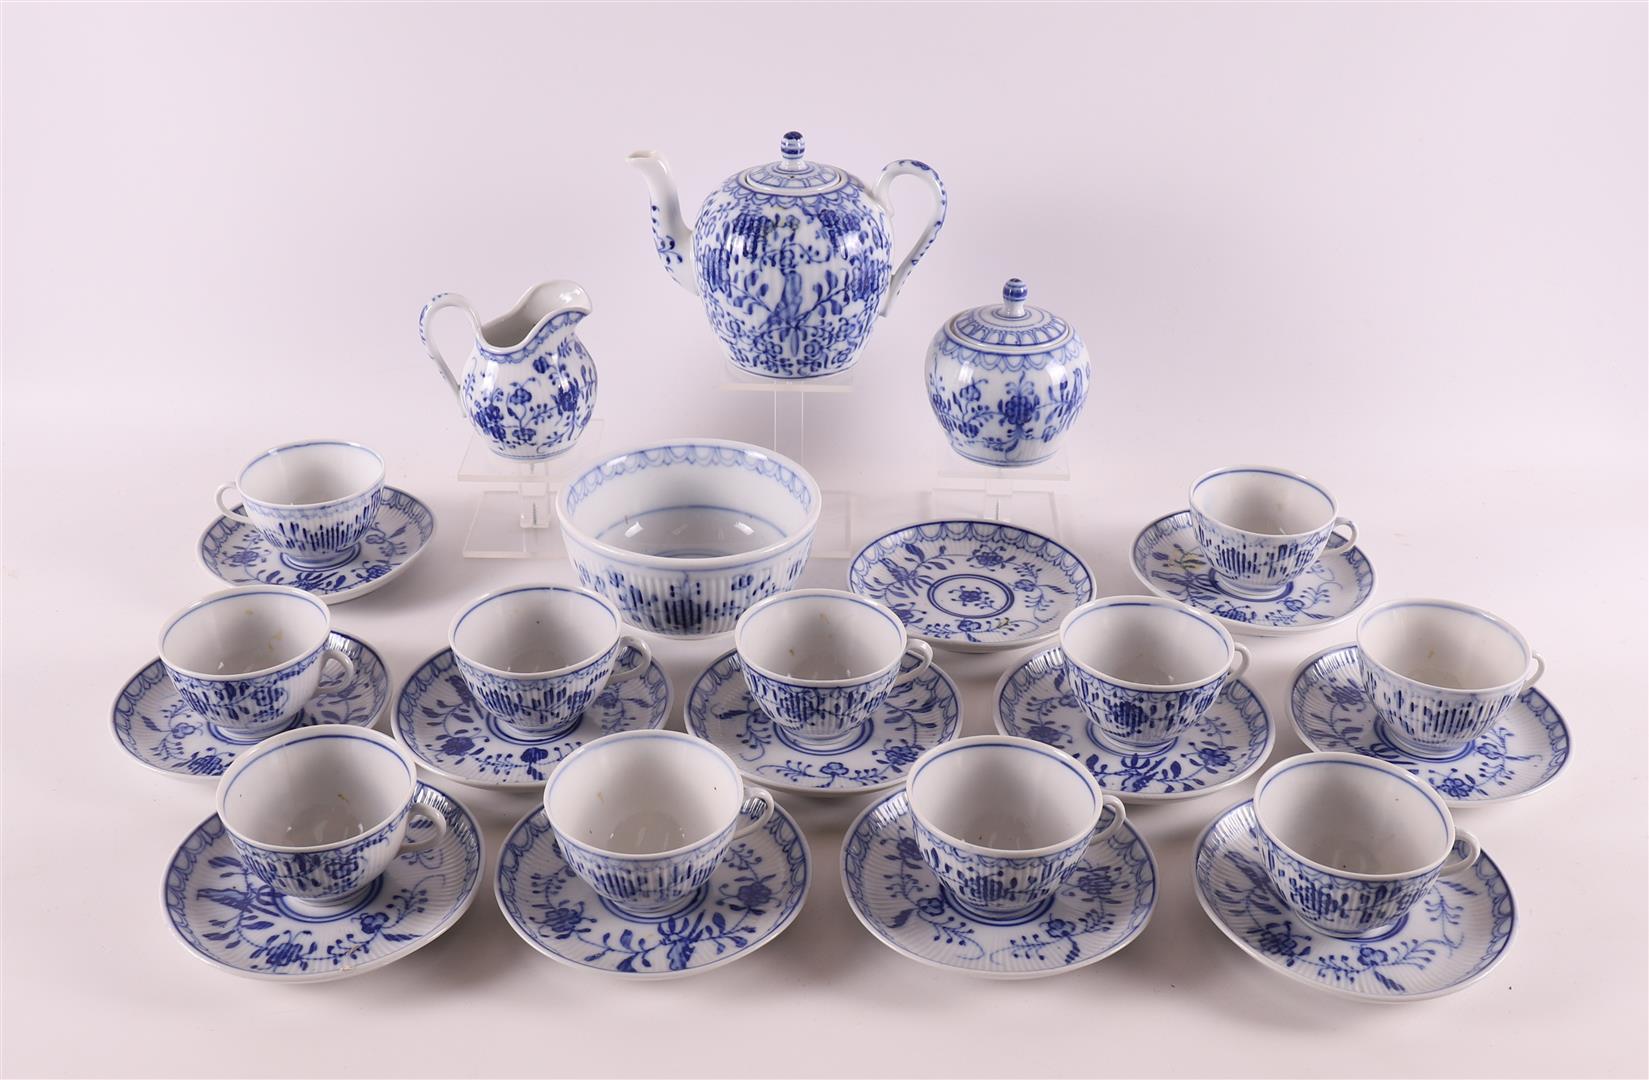 A white porcelain tea service fragment with blue Saxon decor, circa 1900